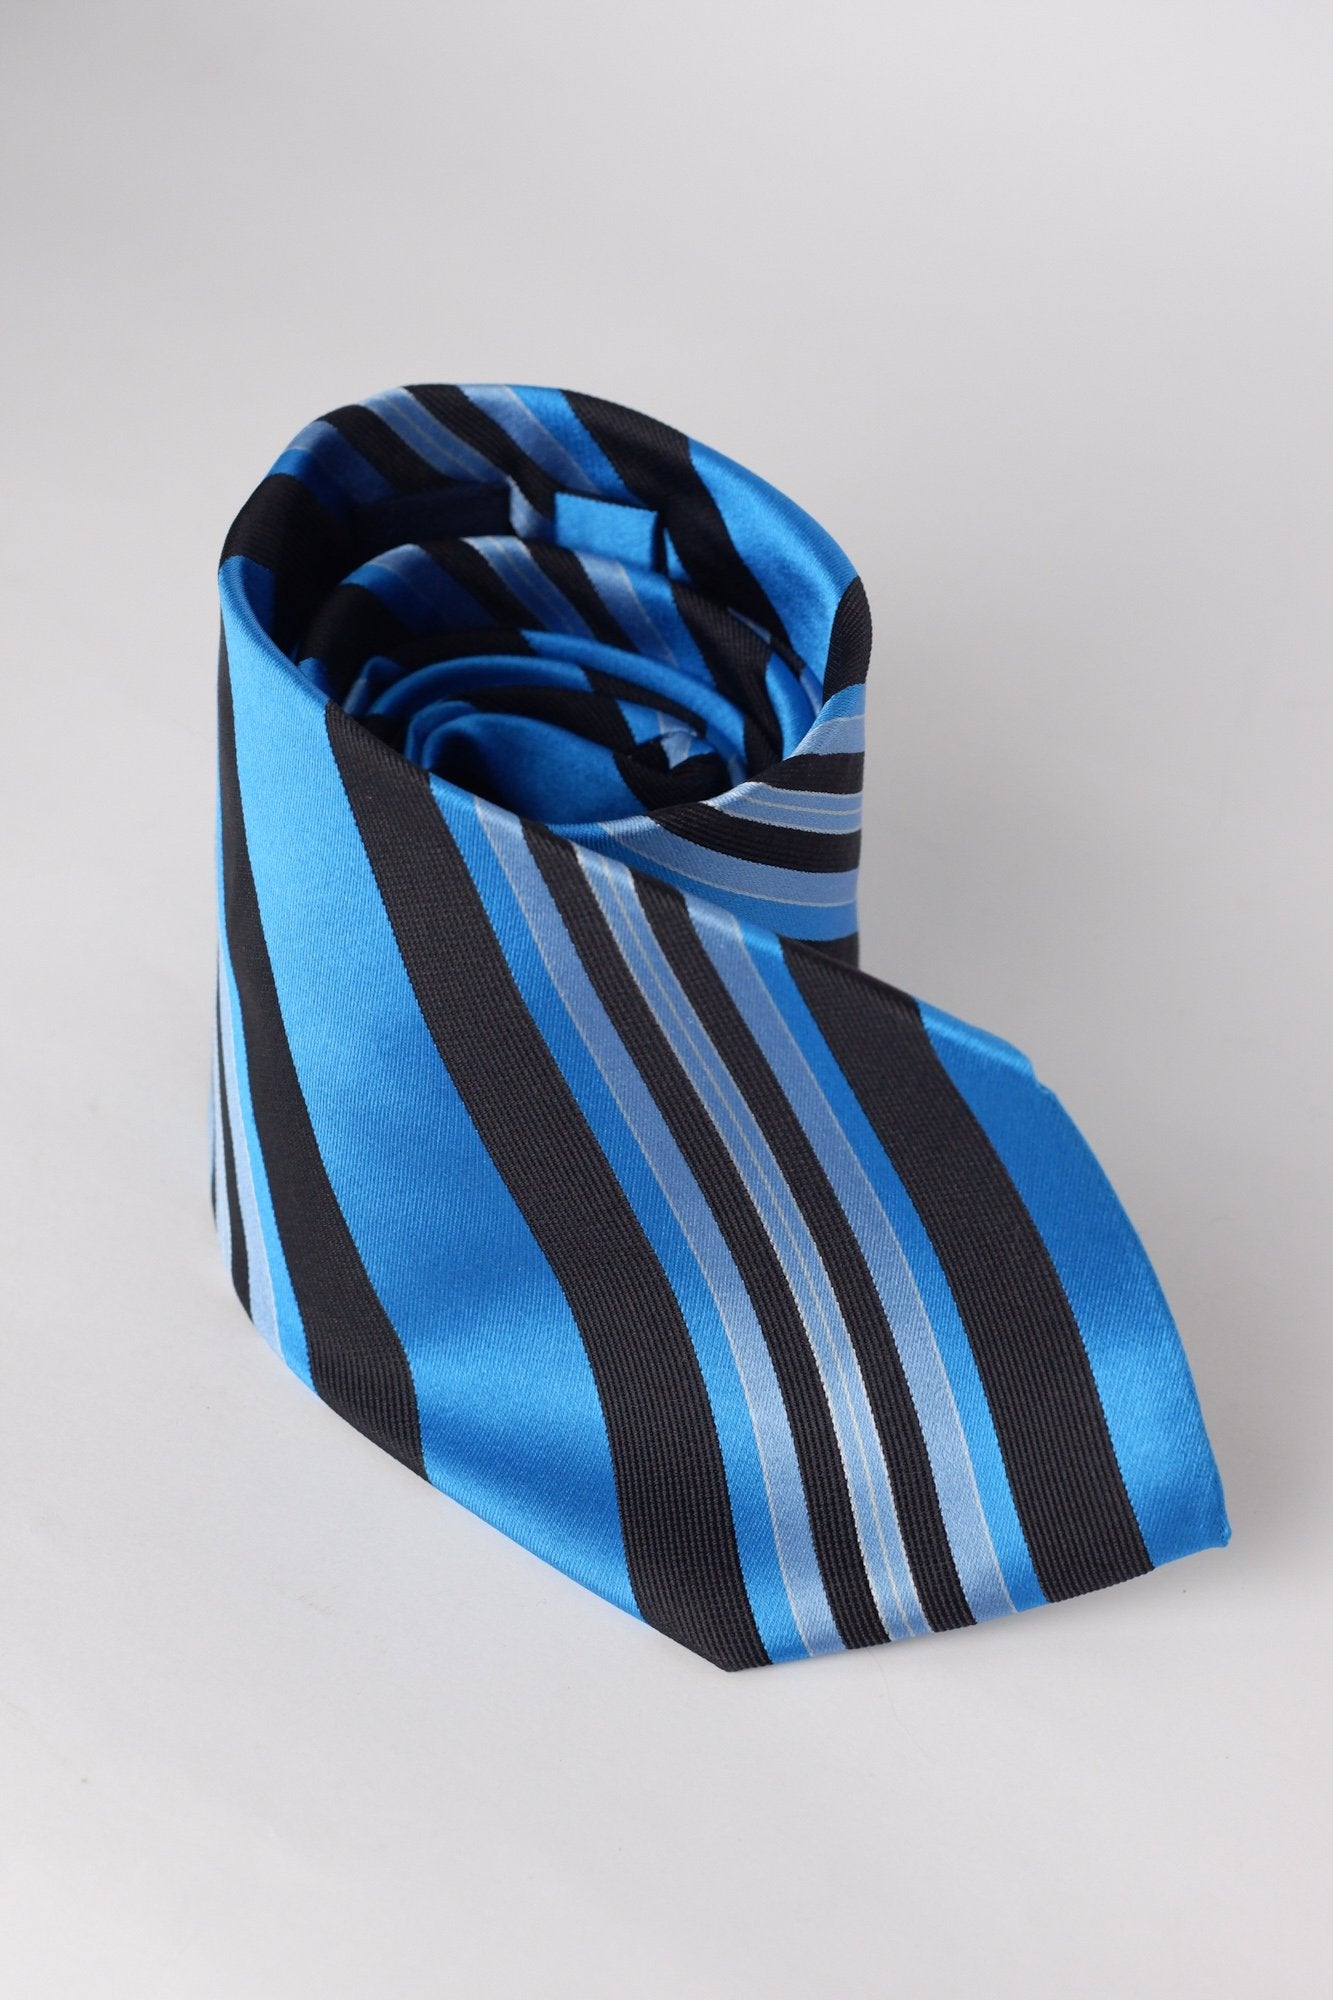 Profumo Blue and Navy Stripes Necktie